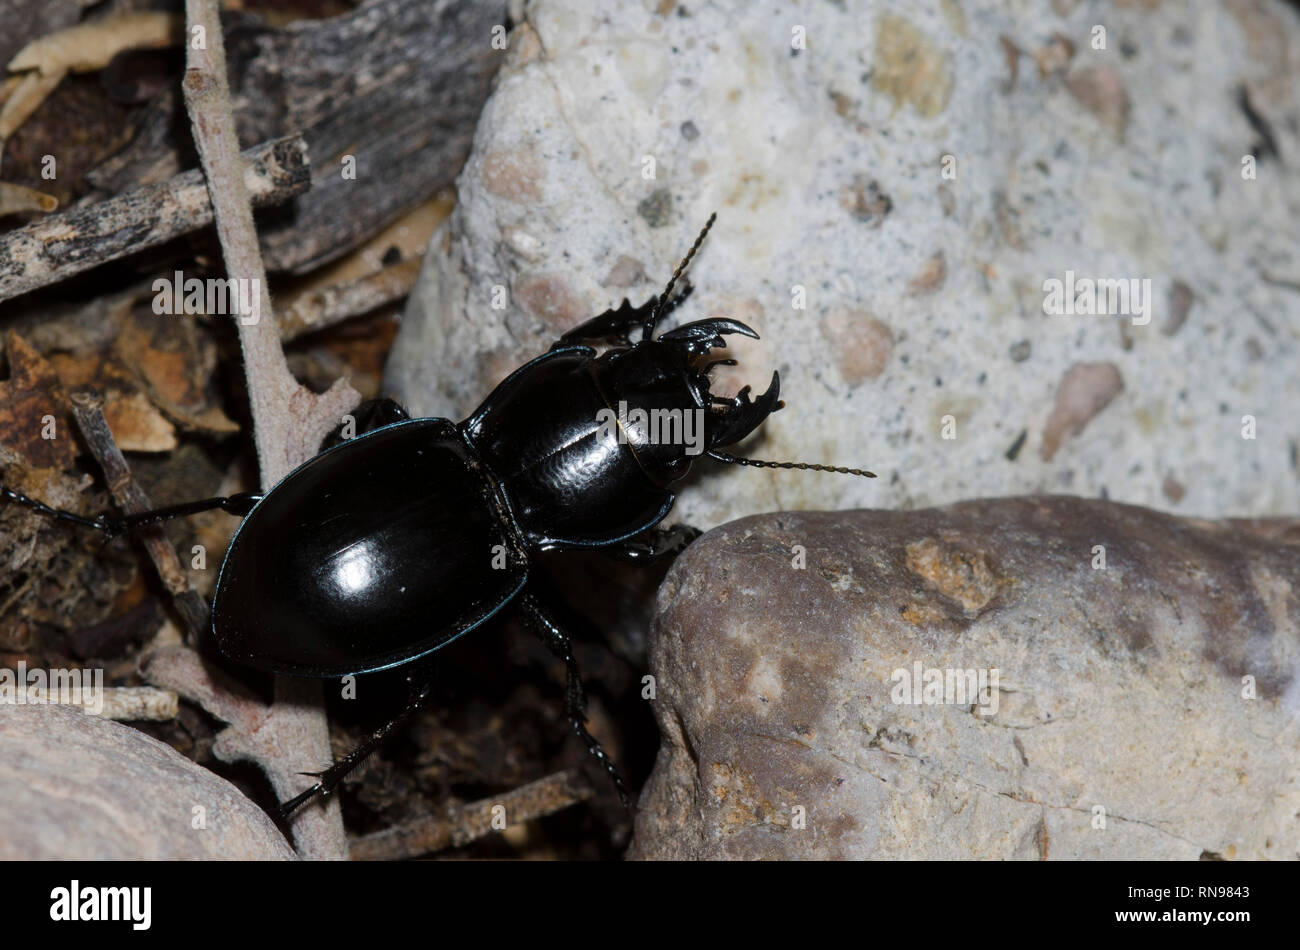 Ground Beetle, Pasimachus sp. Stock Photo